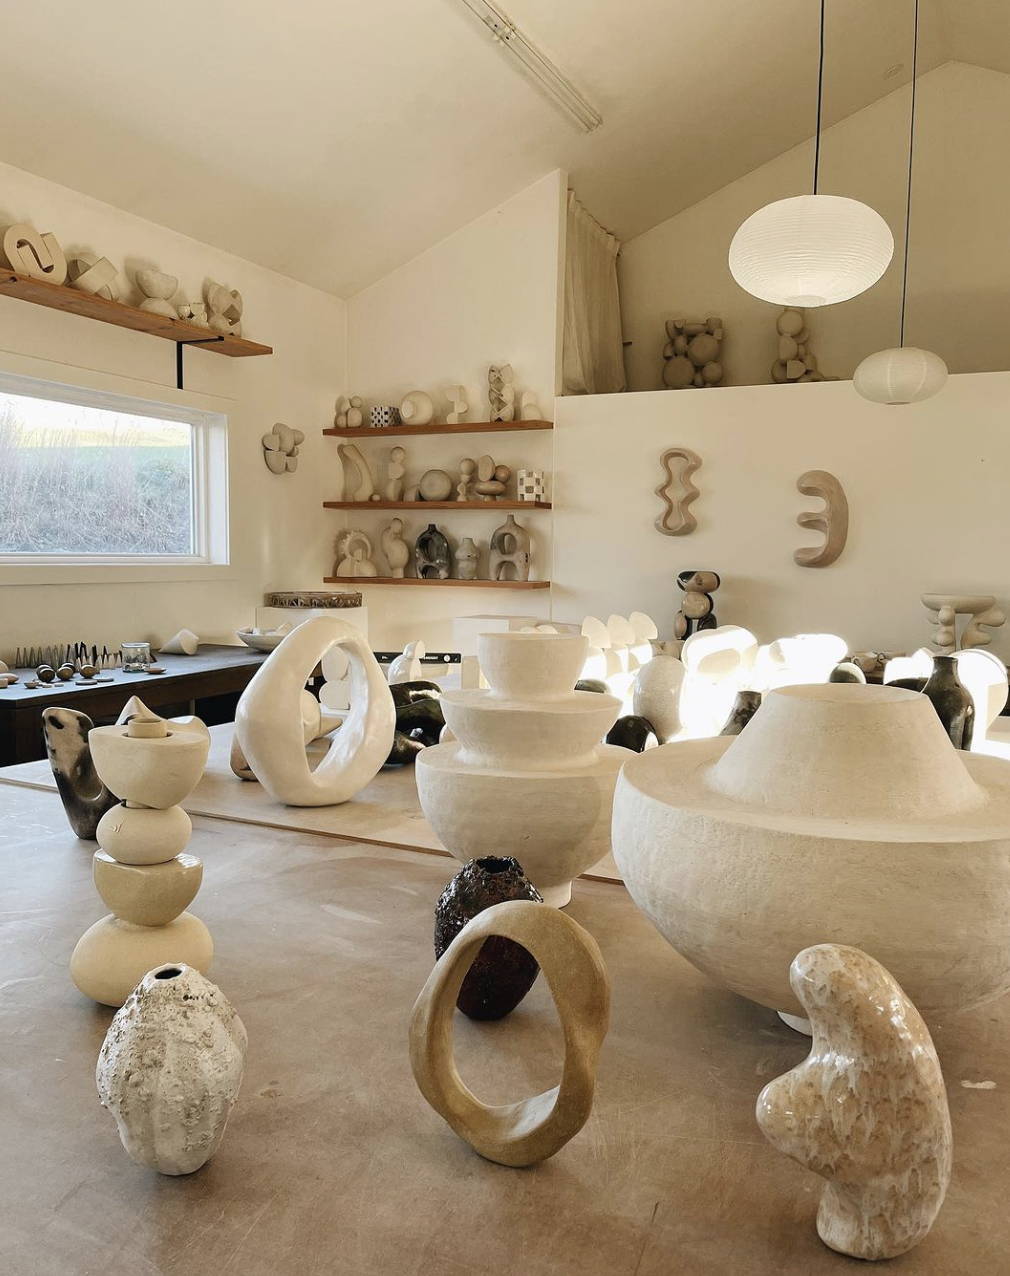 Inside Re Jin Lee's Studio, Ceramic Sculptures made by hand